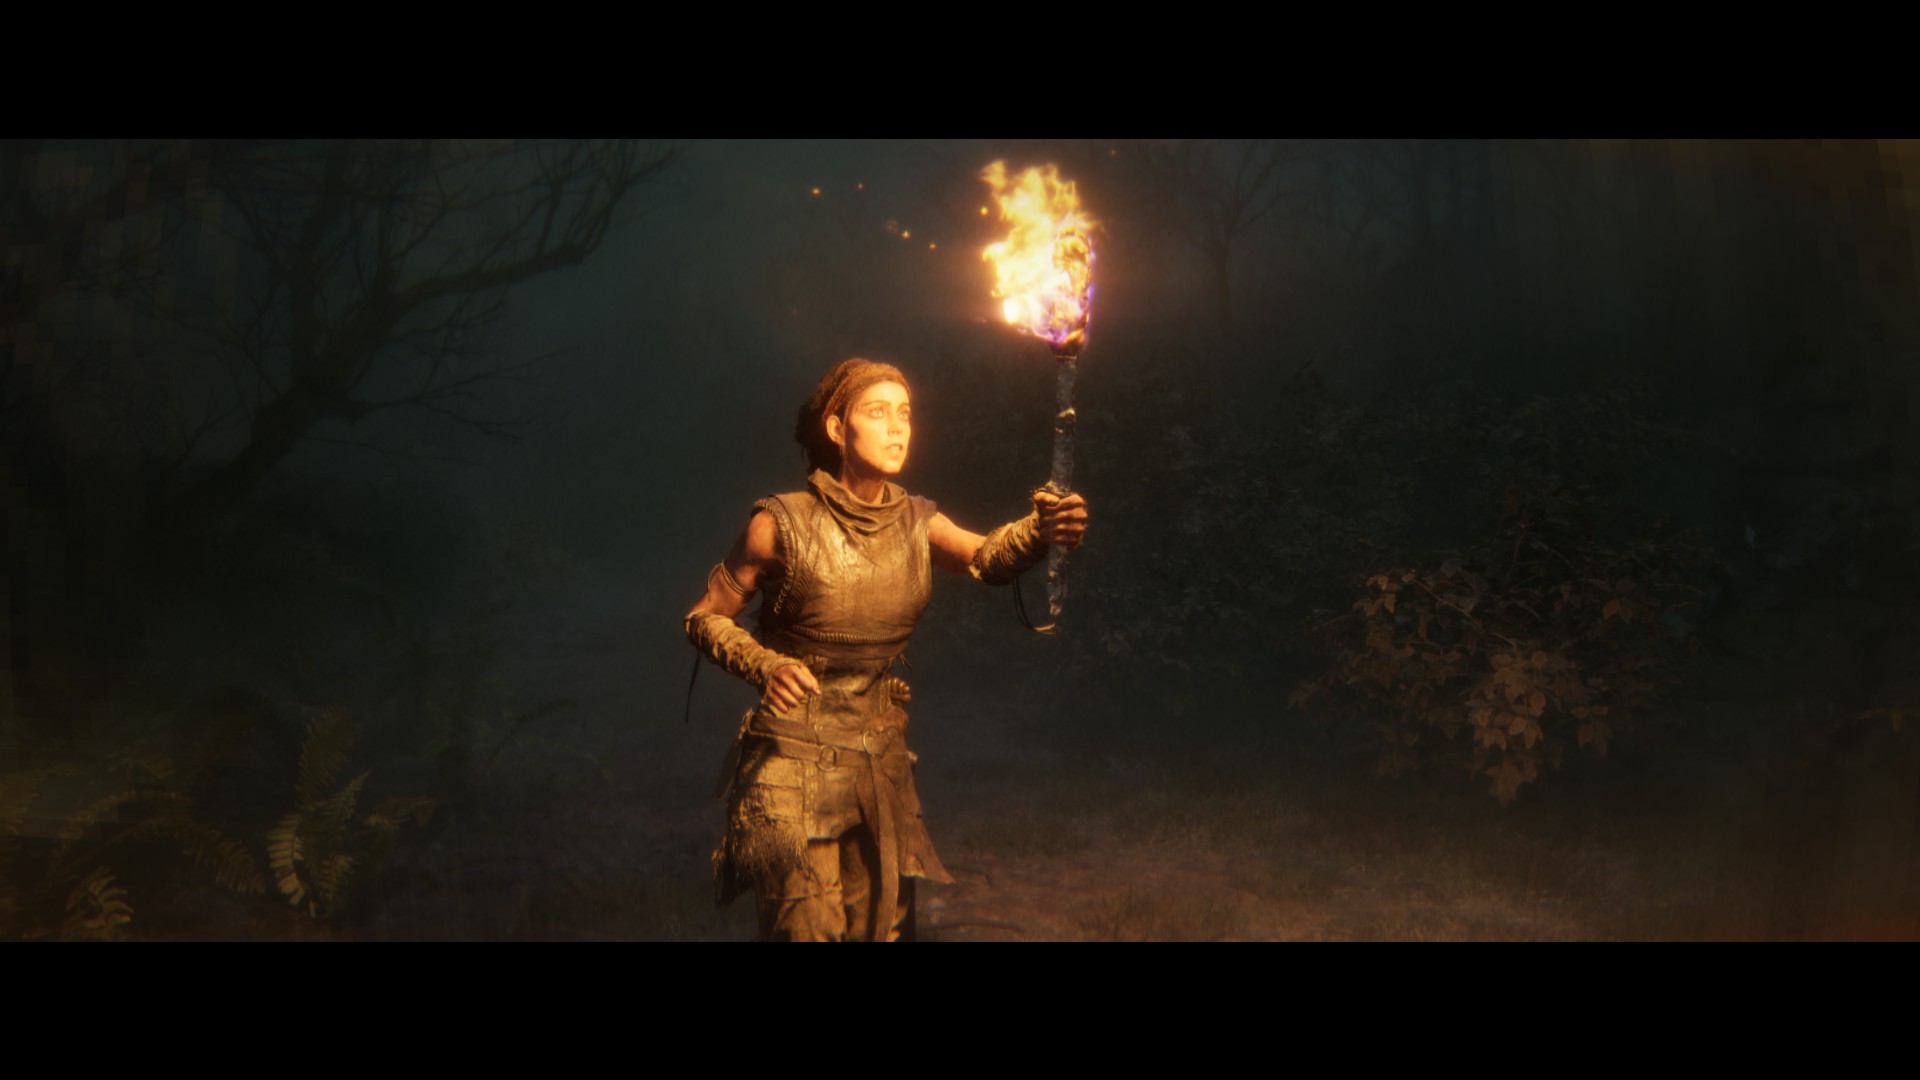 Senua carrying a torch on a dark night in Senua's Saga: Hellblade 2.